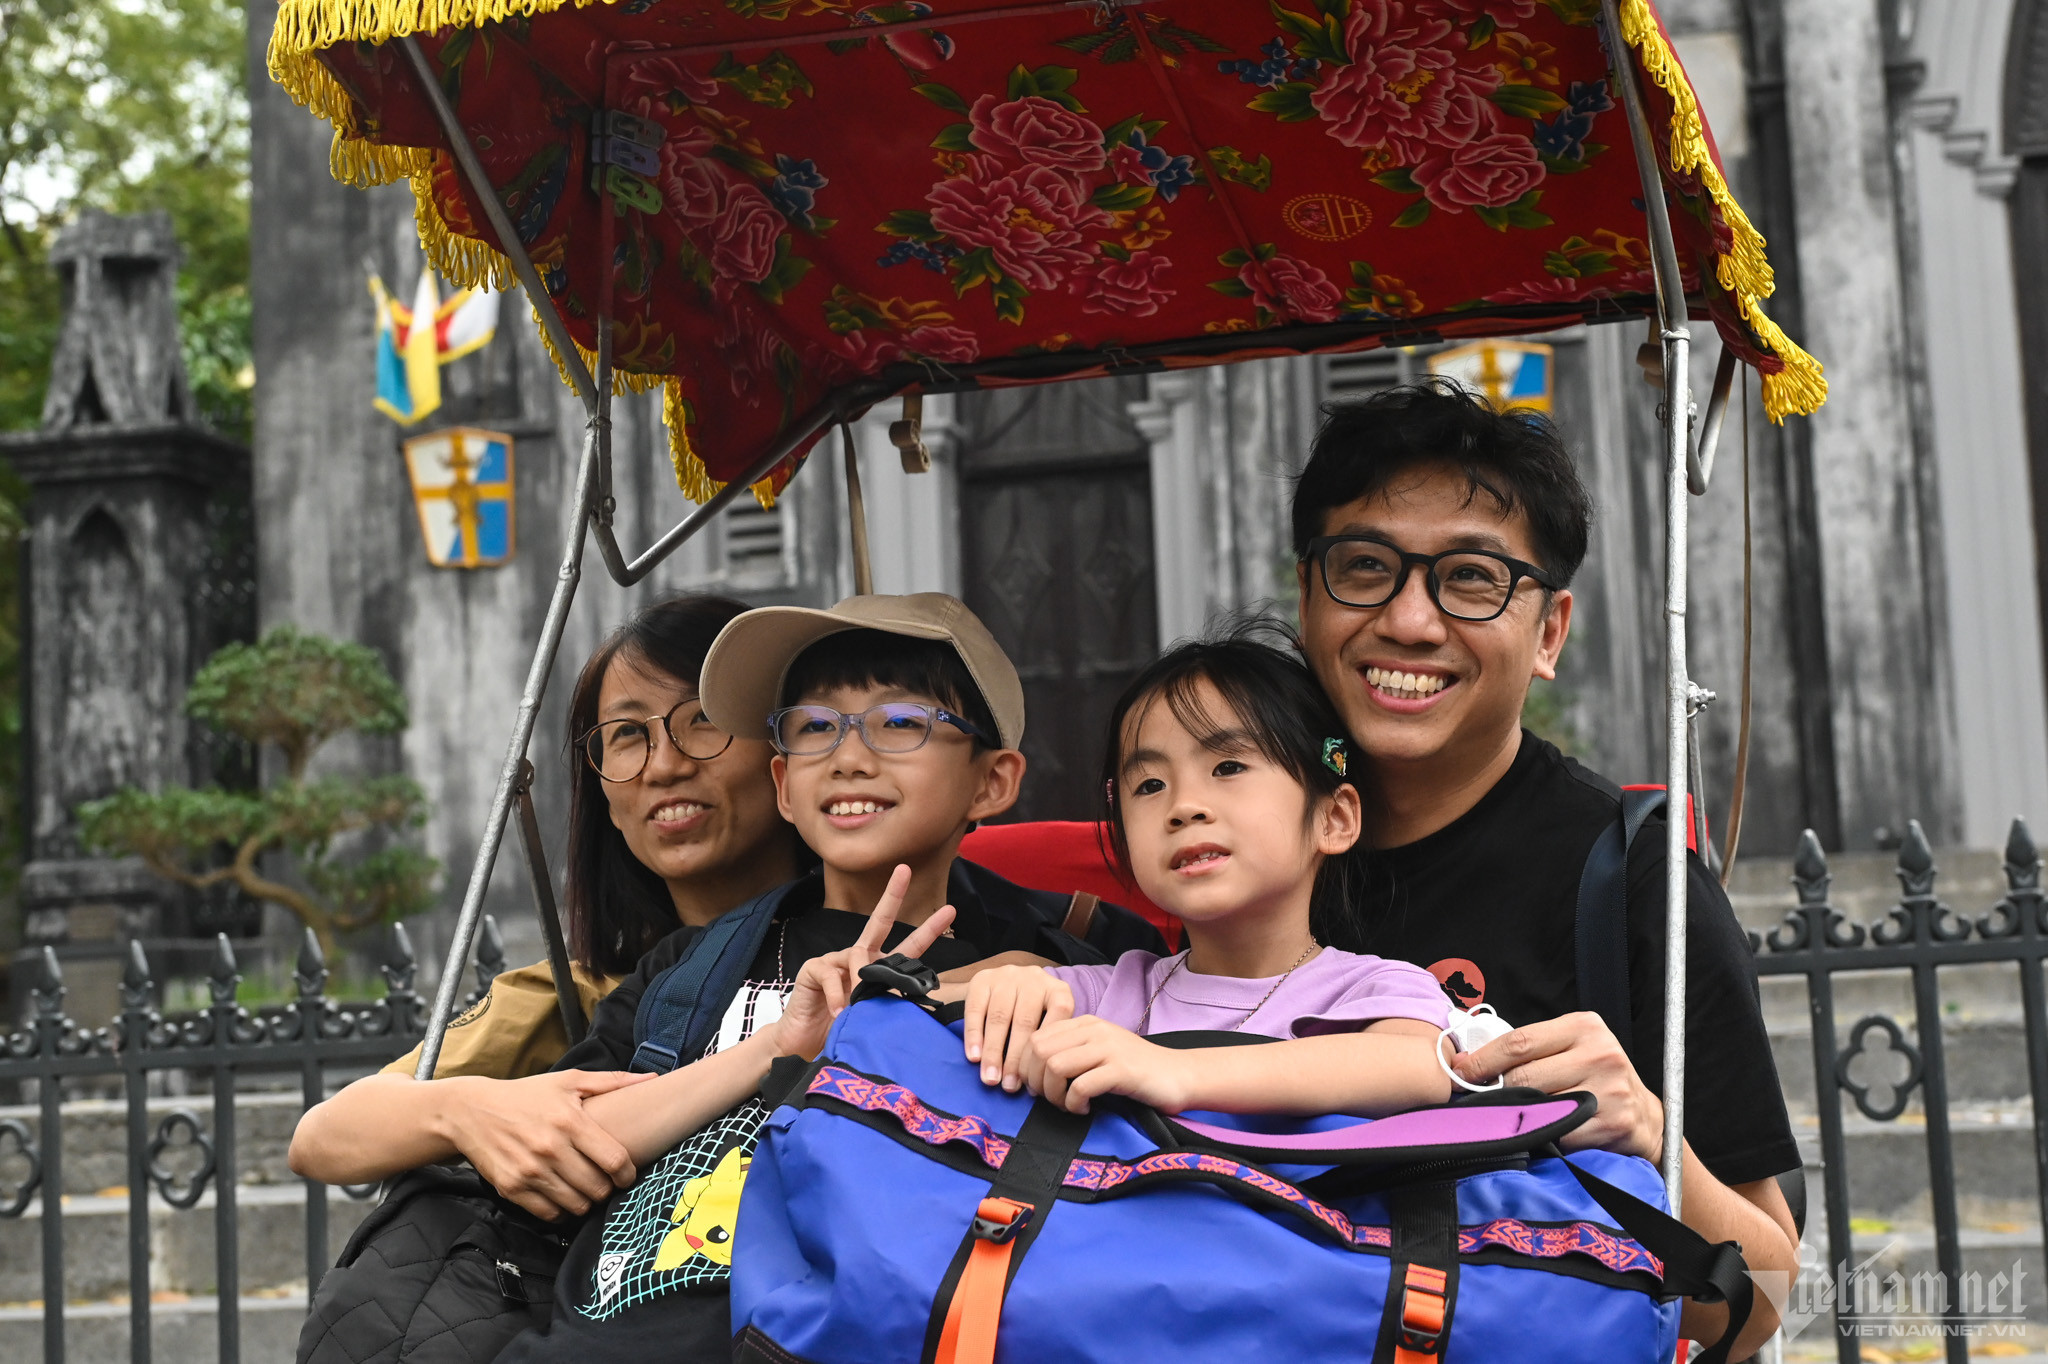 Filipino tourists are biggest spenders in Vietnam in 2022